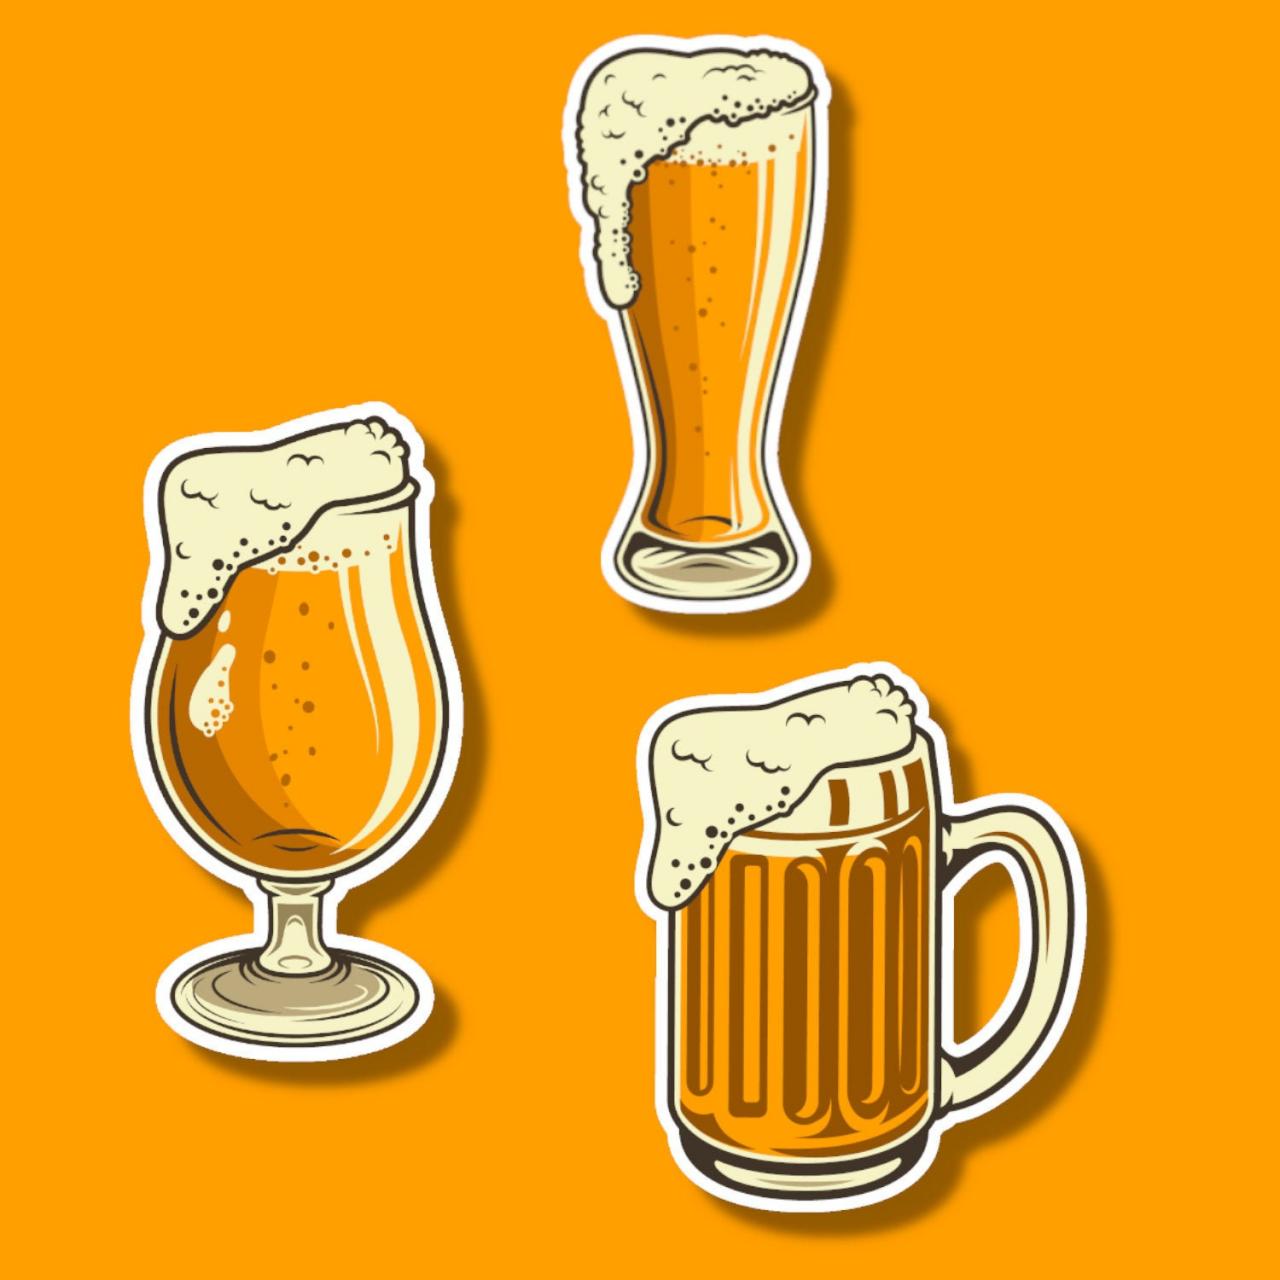 Beer Sticker | Beer Mug Sticker | Alcohol Sticker | Beer Goblet Sticker | Beer Glass Sticker | Funny Sticker | Small Gift | Bachelor Sticker